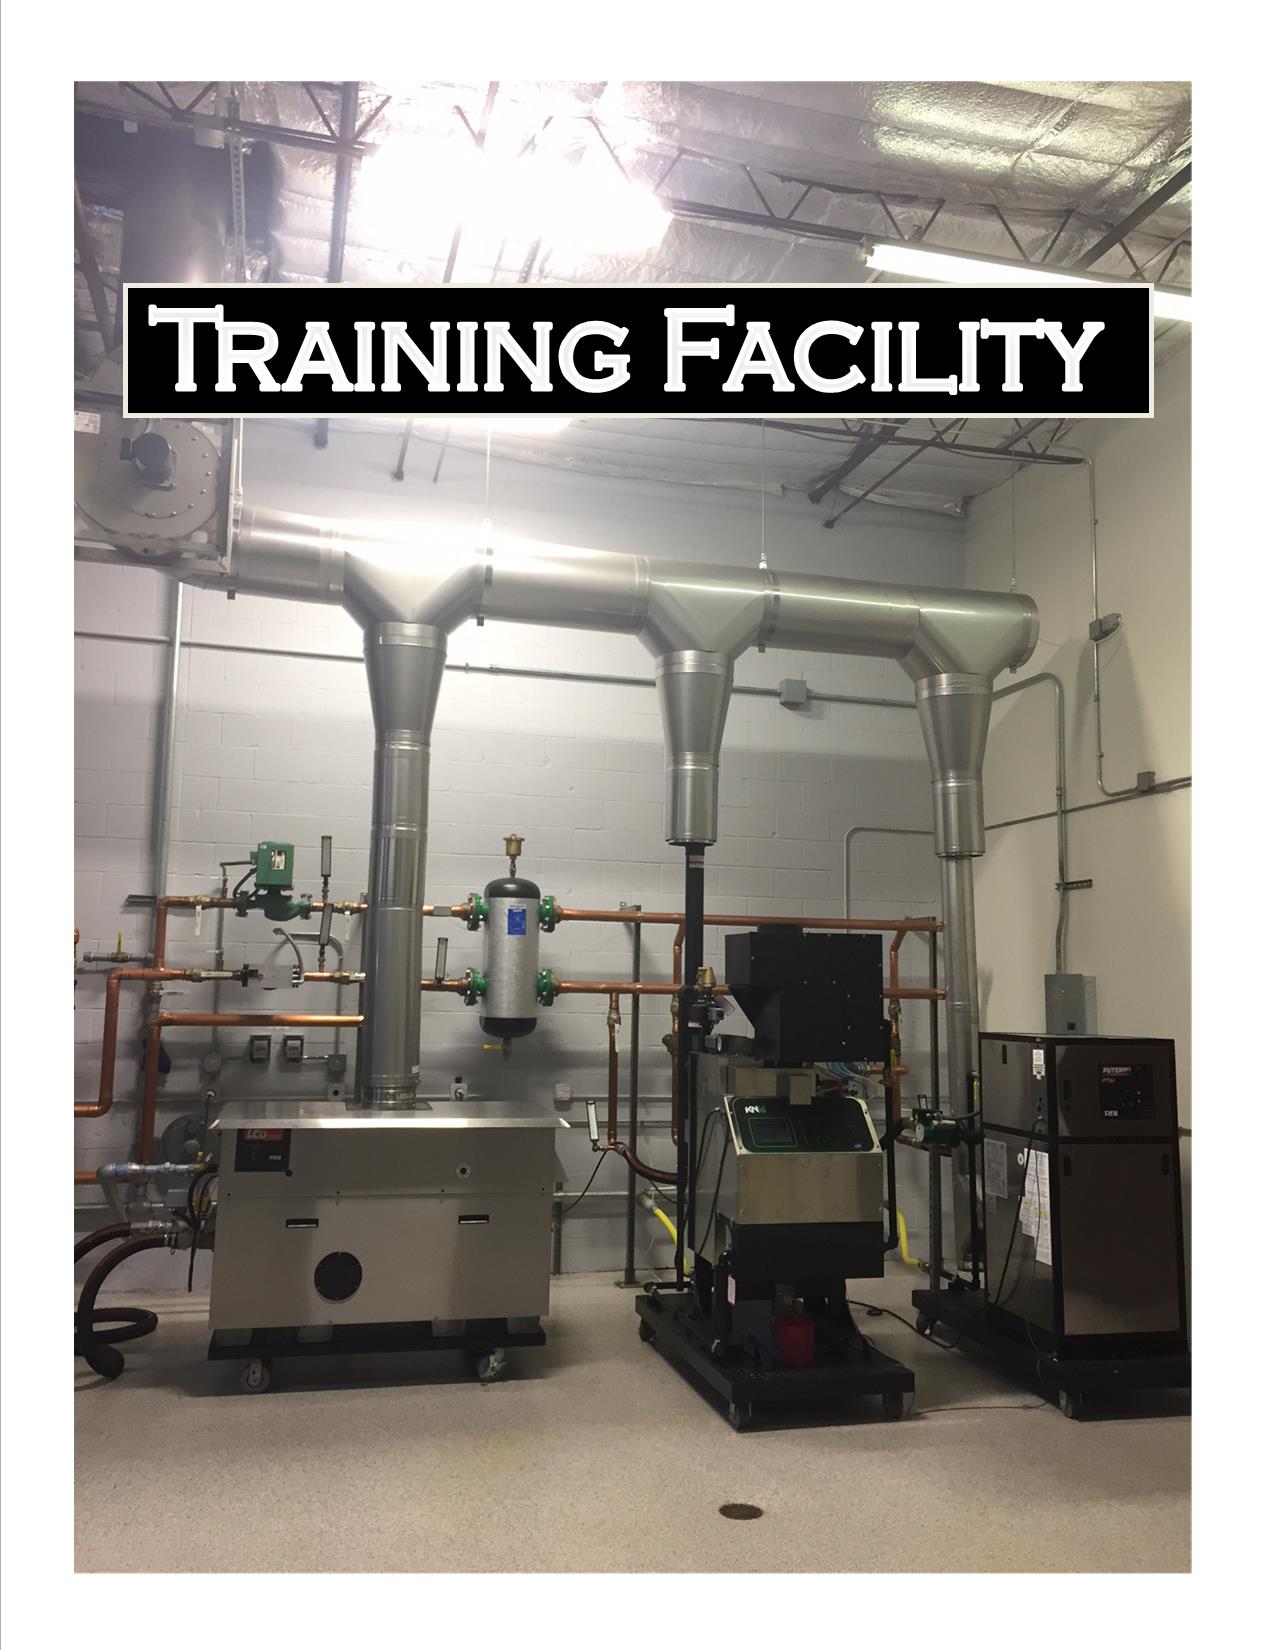 Live Boiler Training Lab in Houston